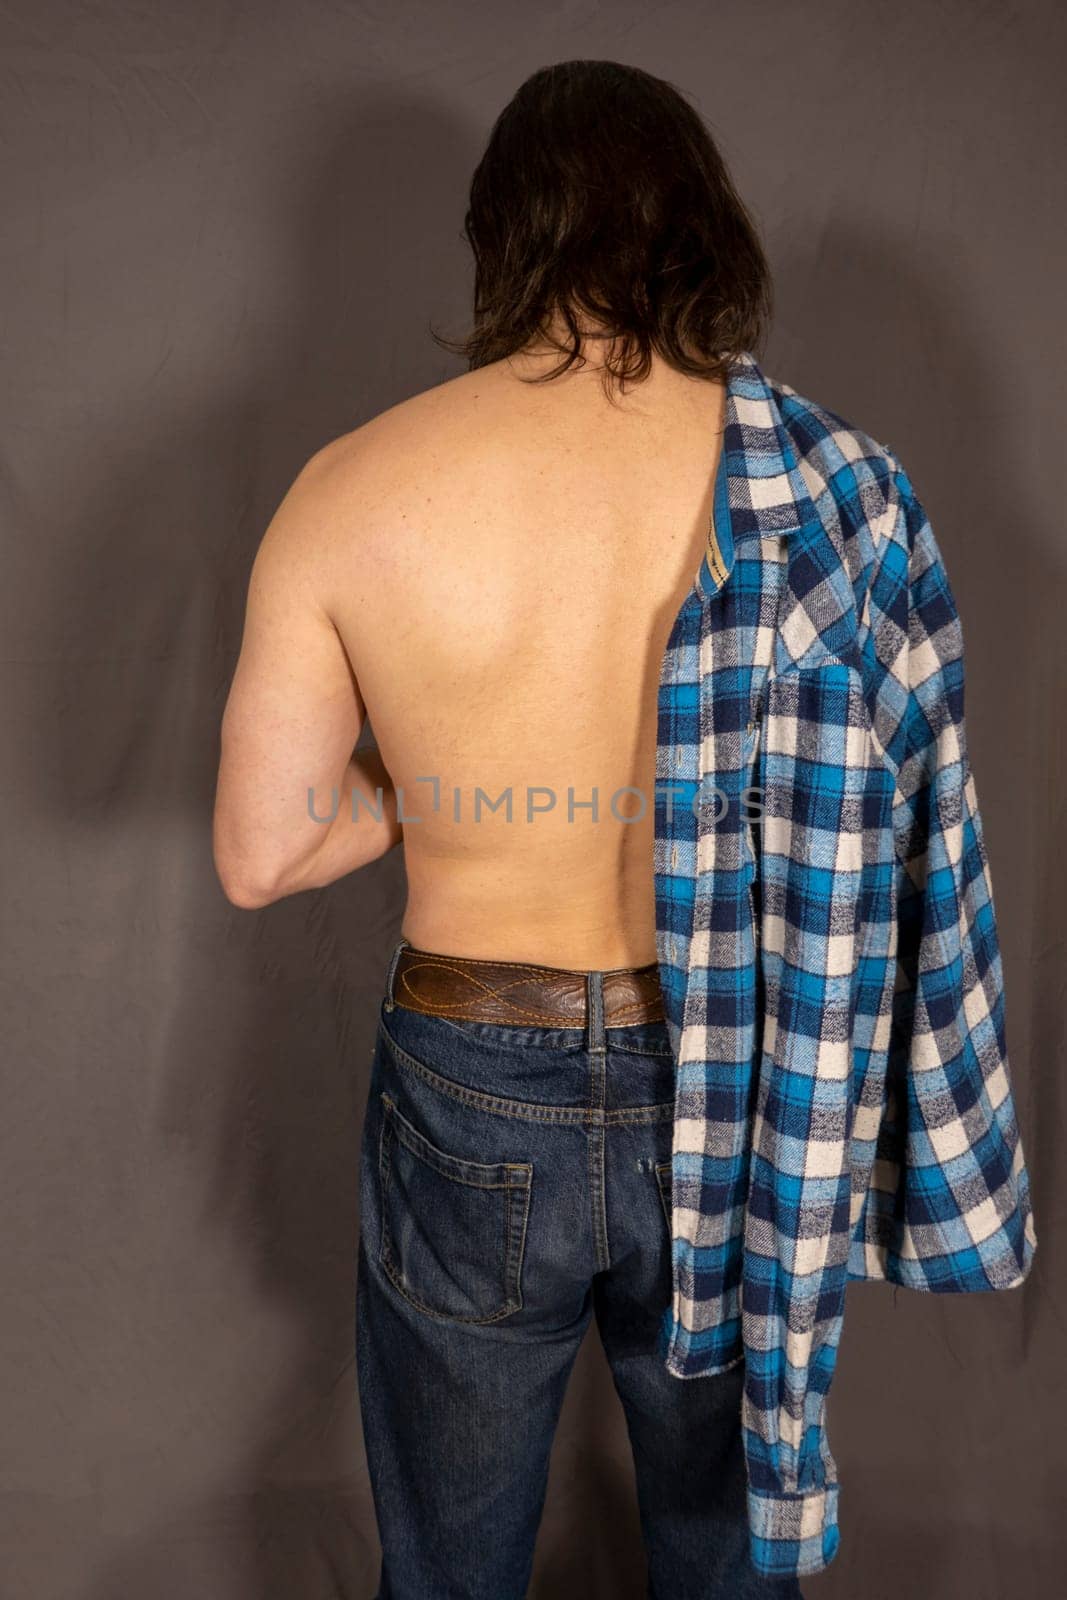 Muscular man's back on a grey background. by kajasja